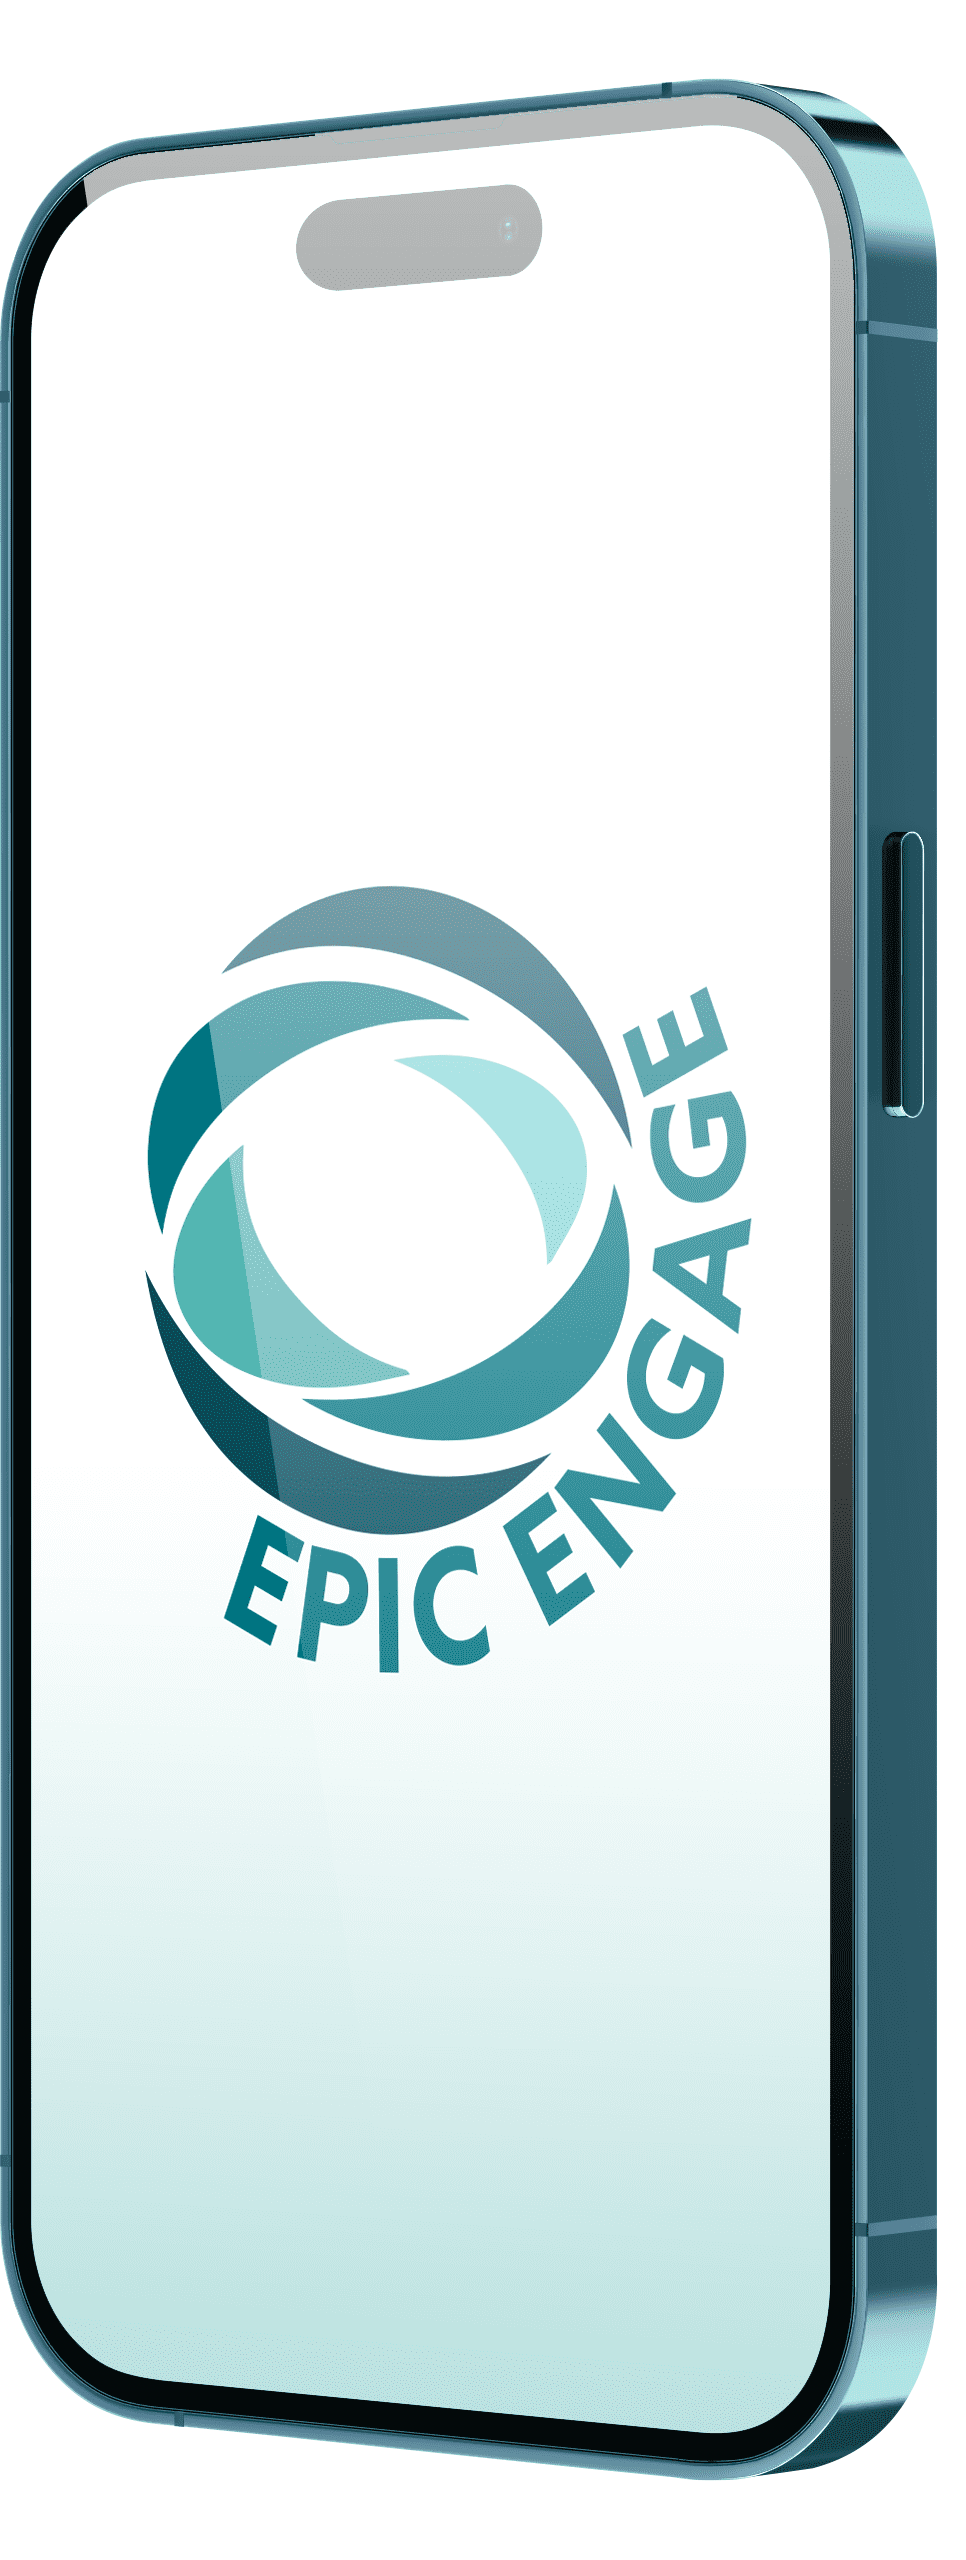 epic engage travel staffing